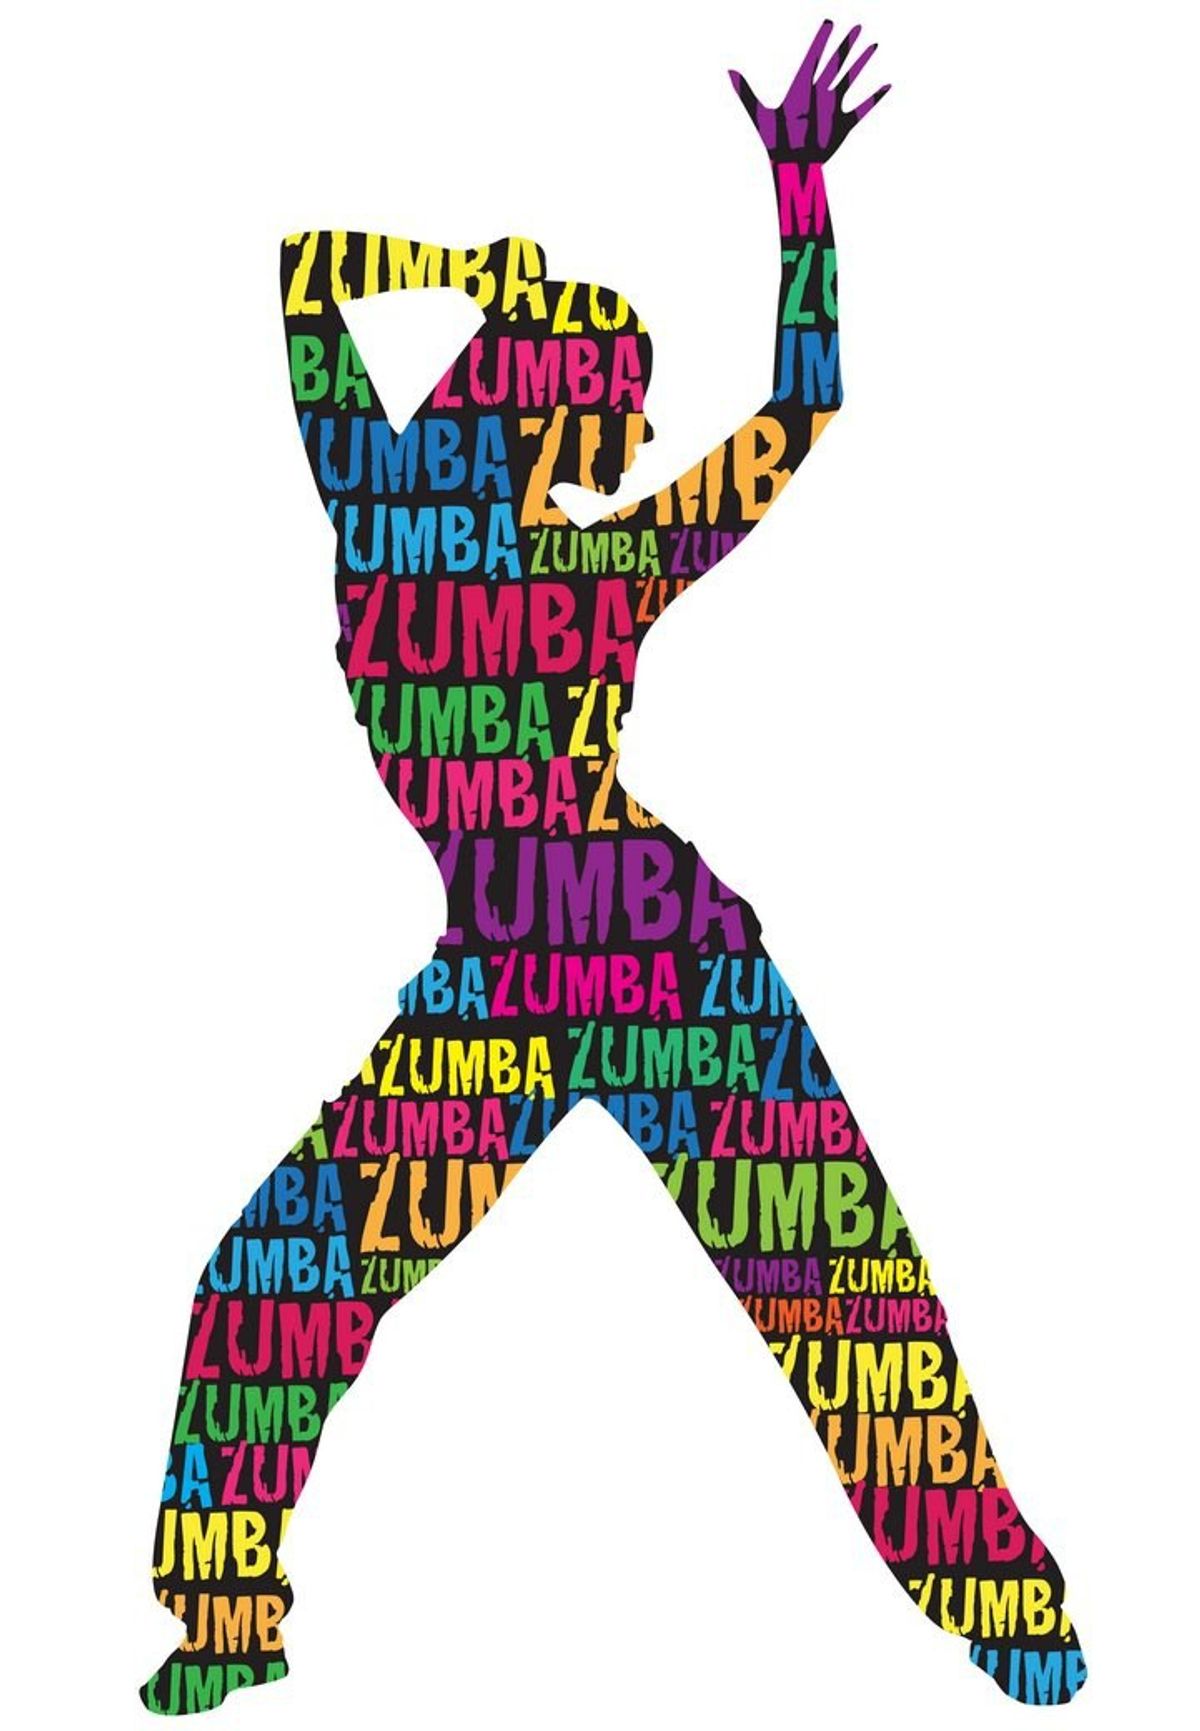 Zumba: A Fun Way To Exercise